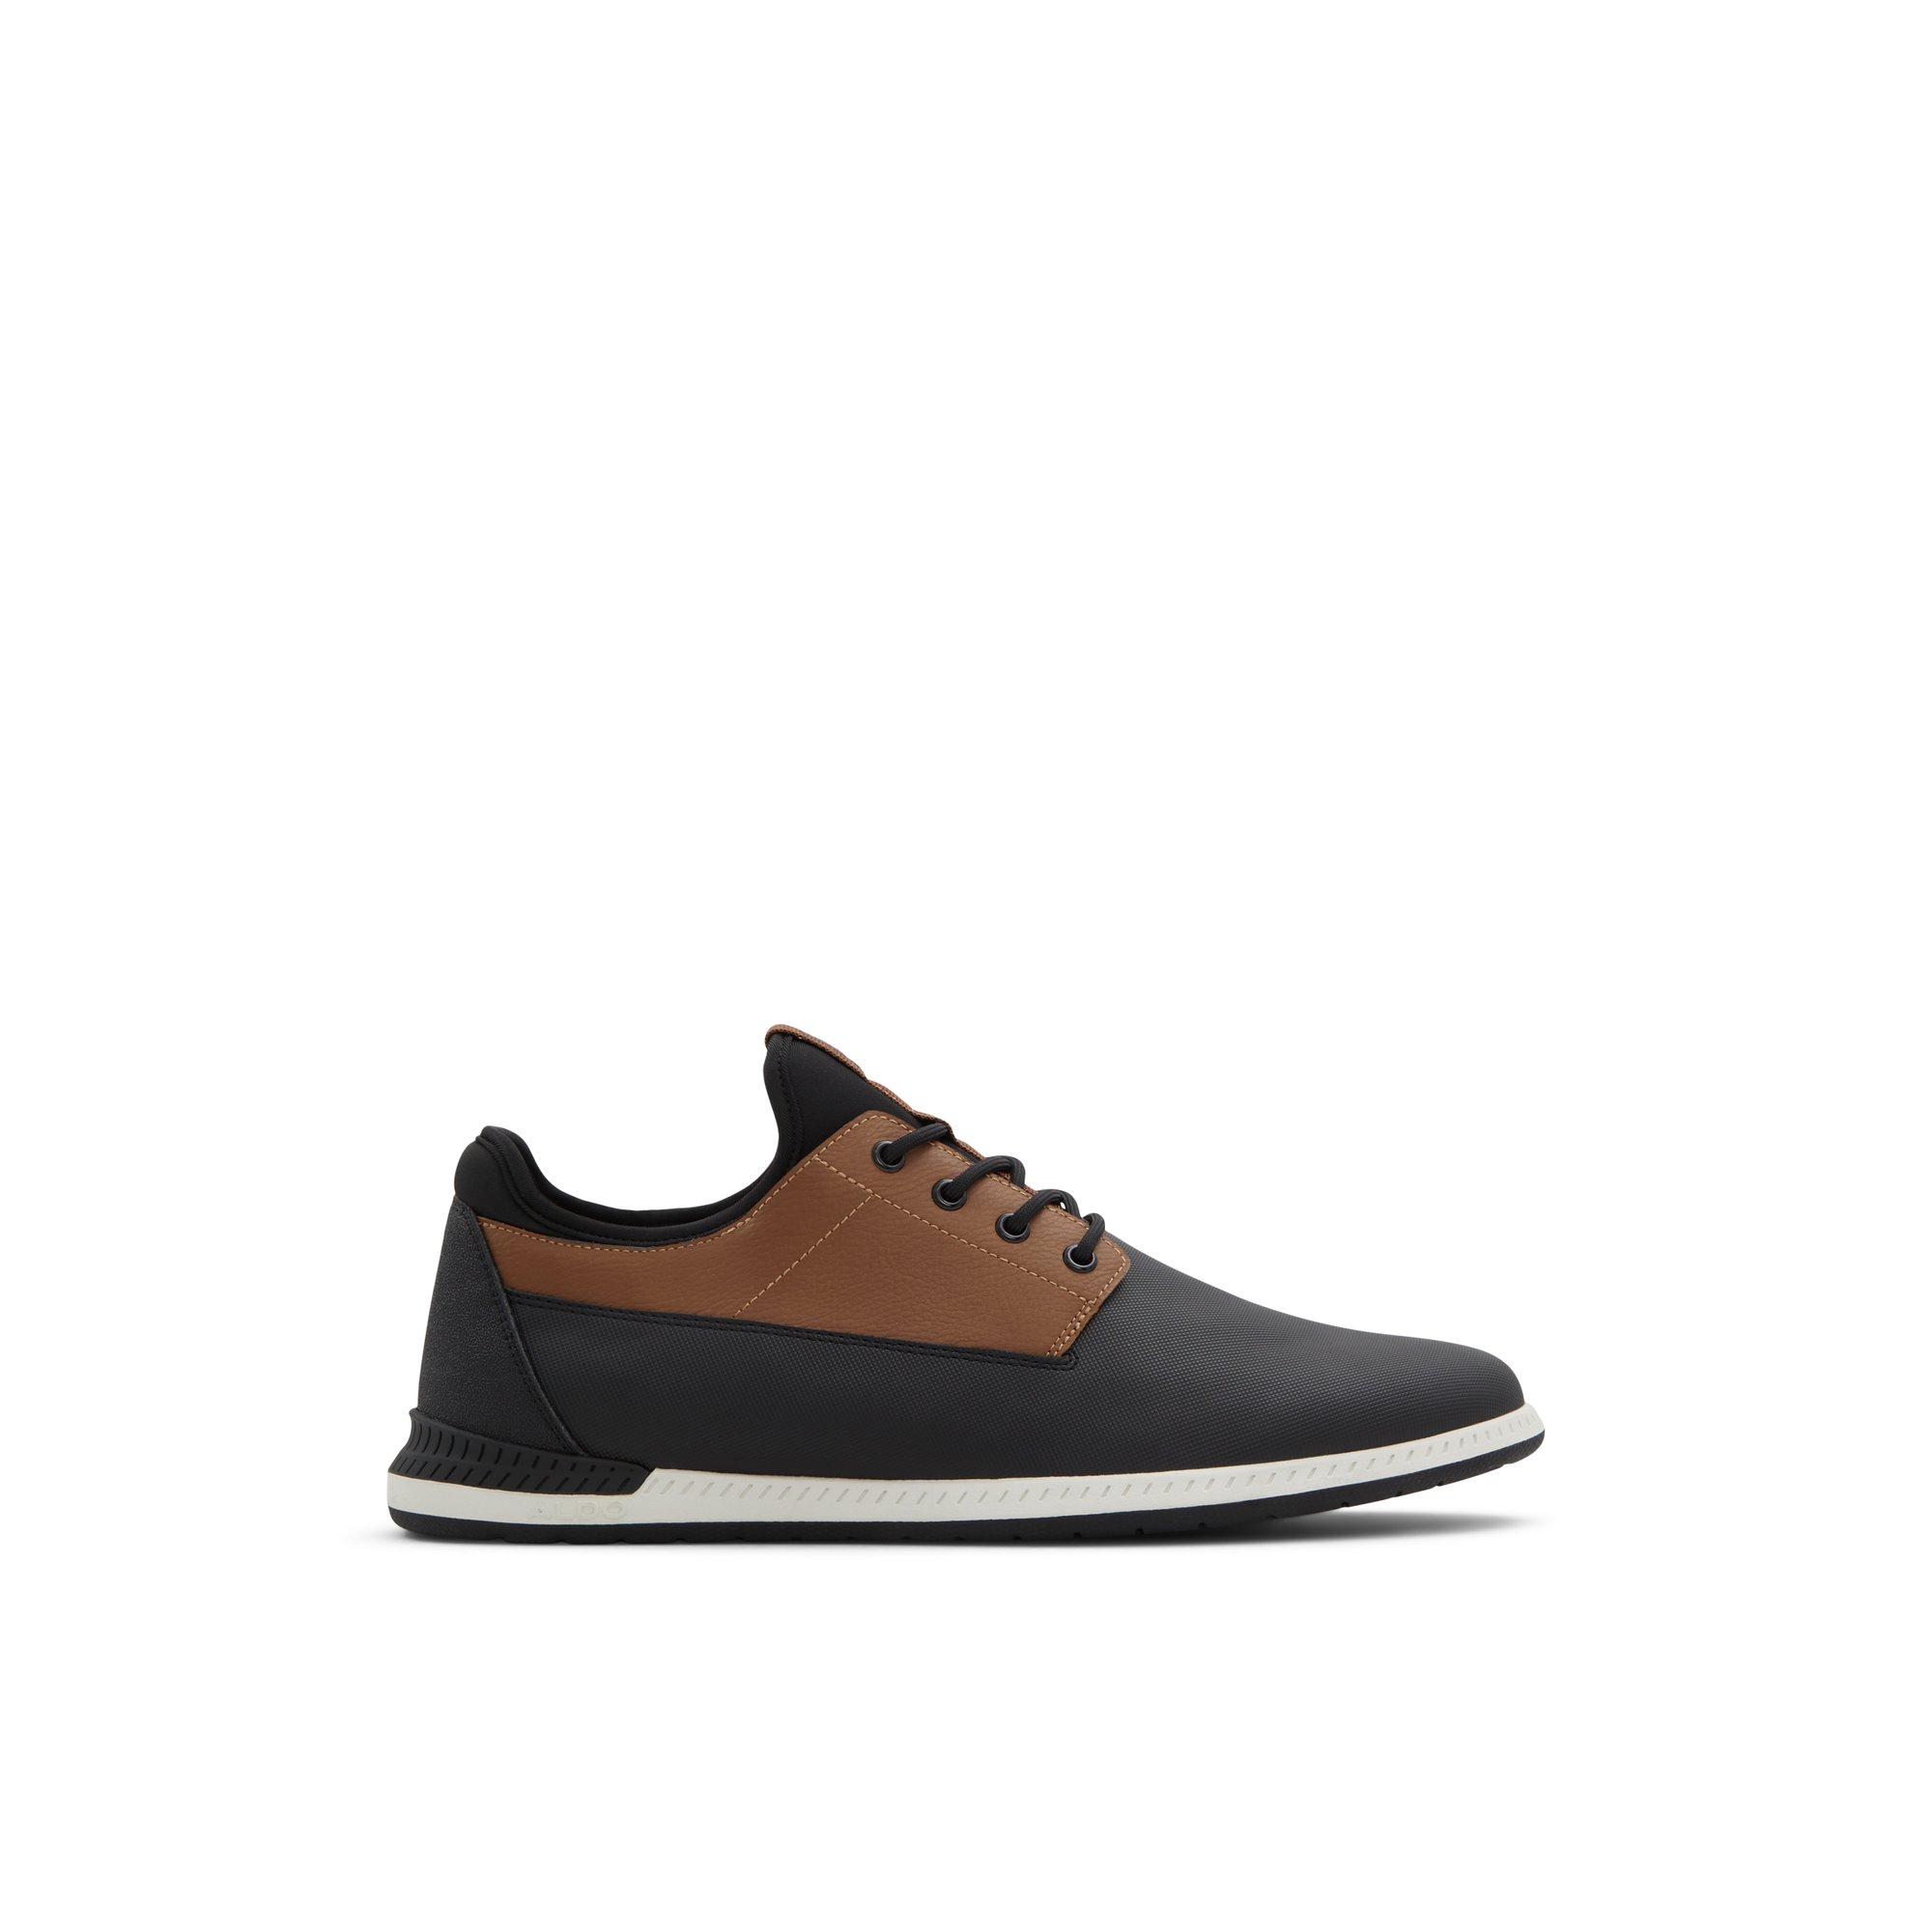 ALDO Blufferss-wr - Men's Casual Shoes - Brown